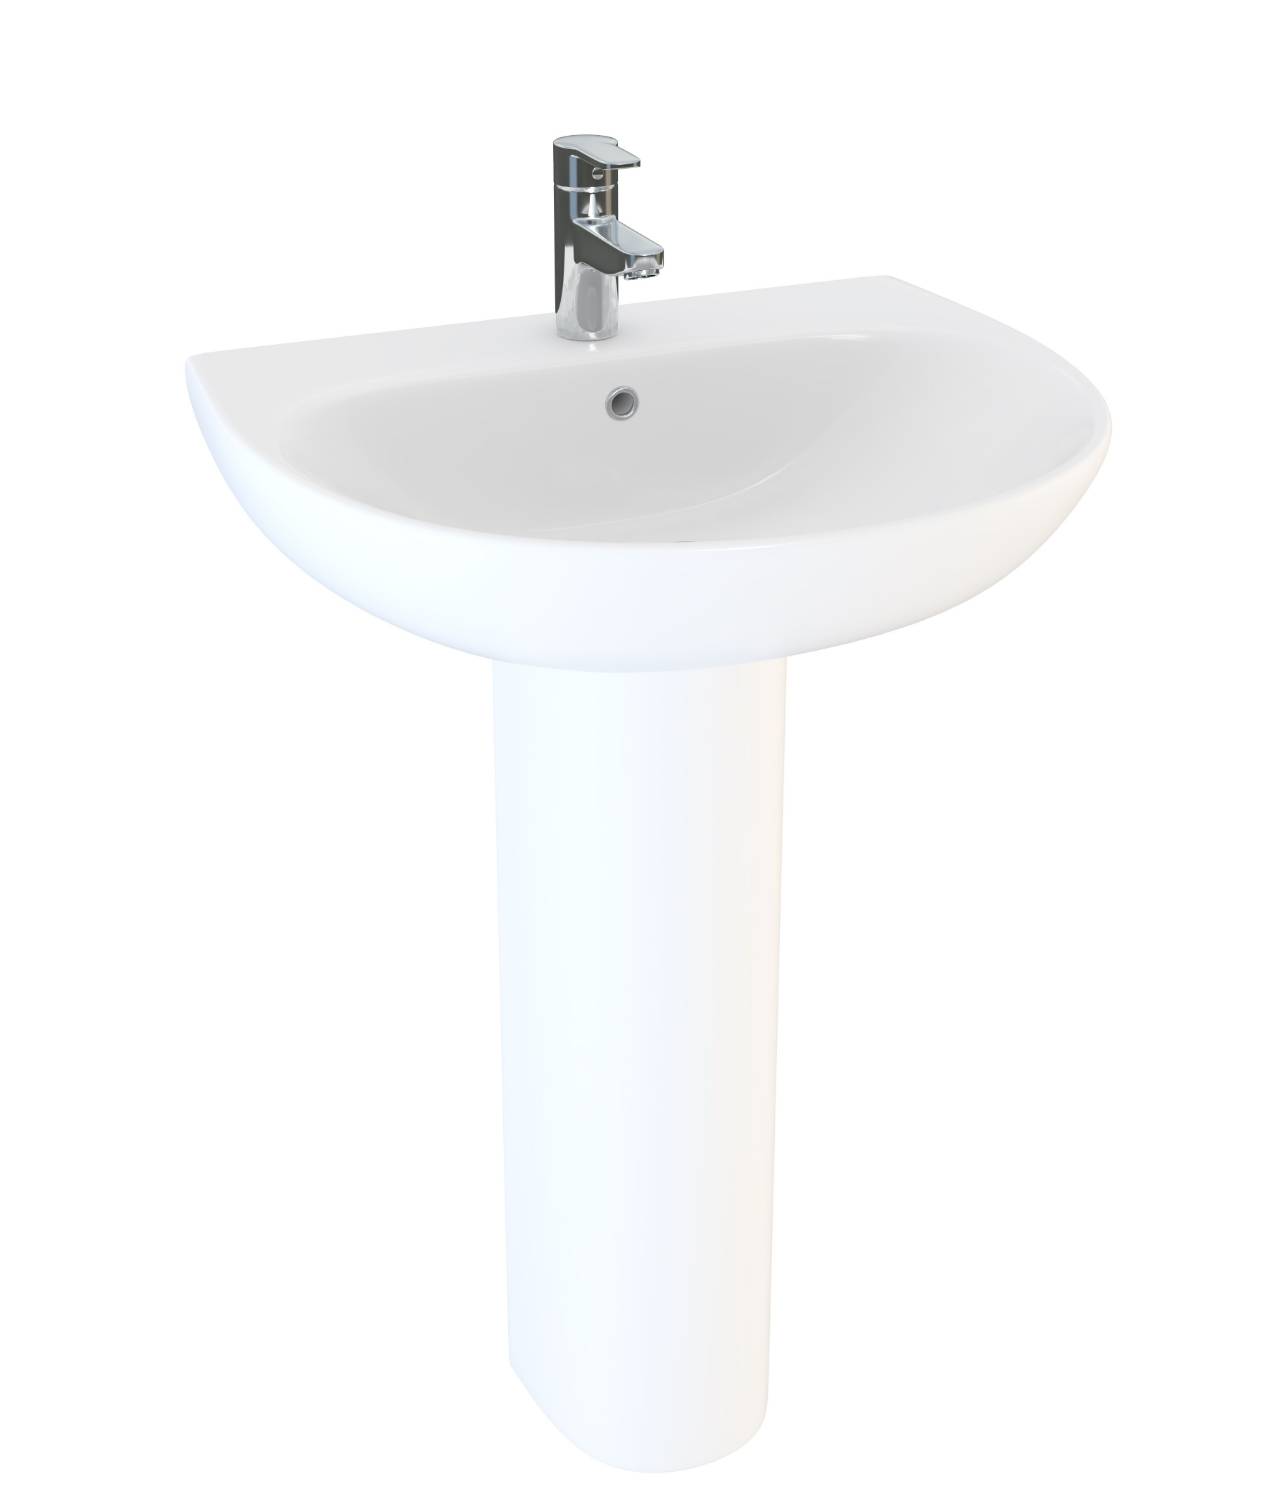 Designer Series 5 60 cm 1TH basin and pedestal